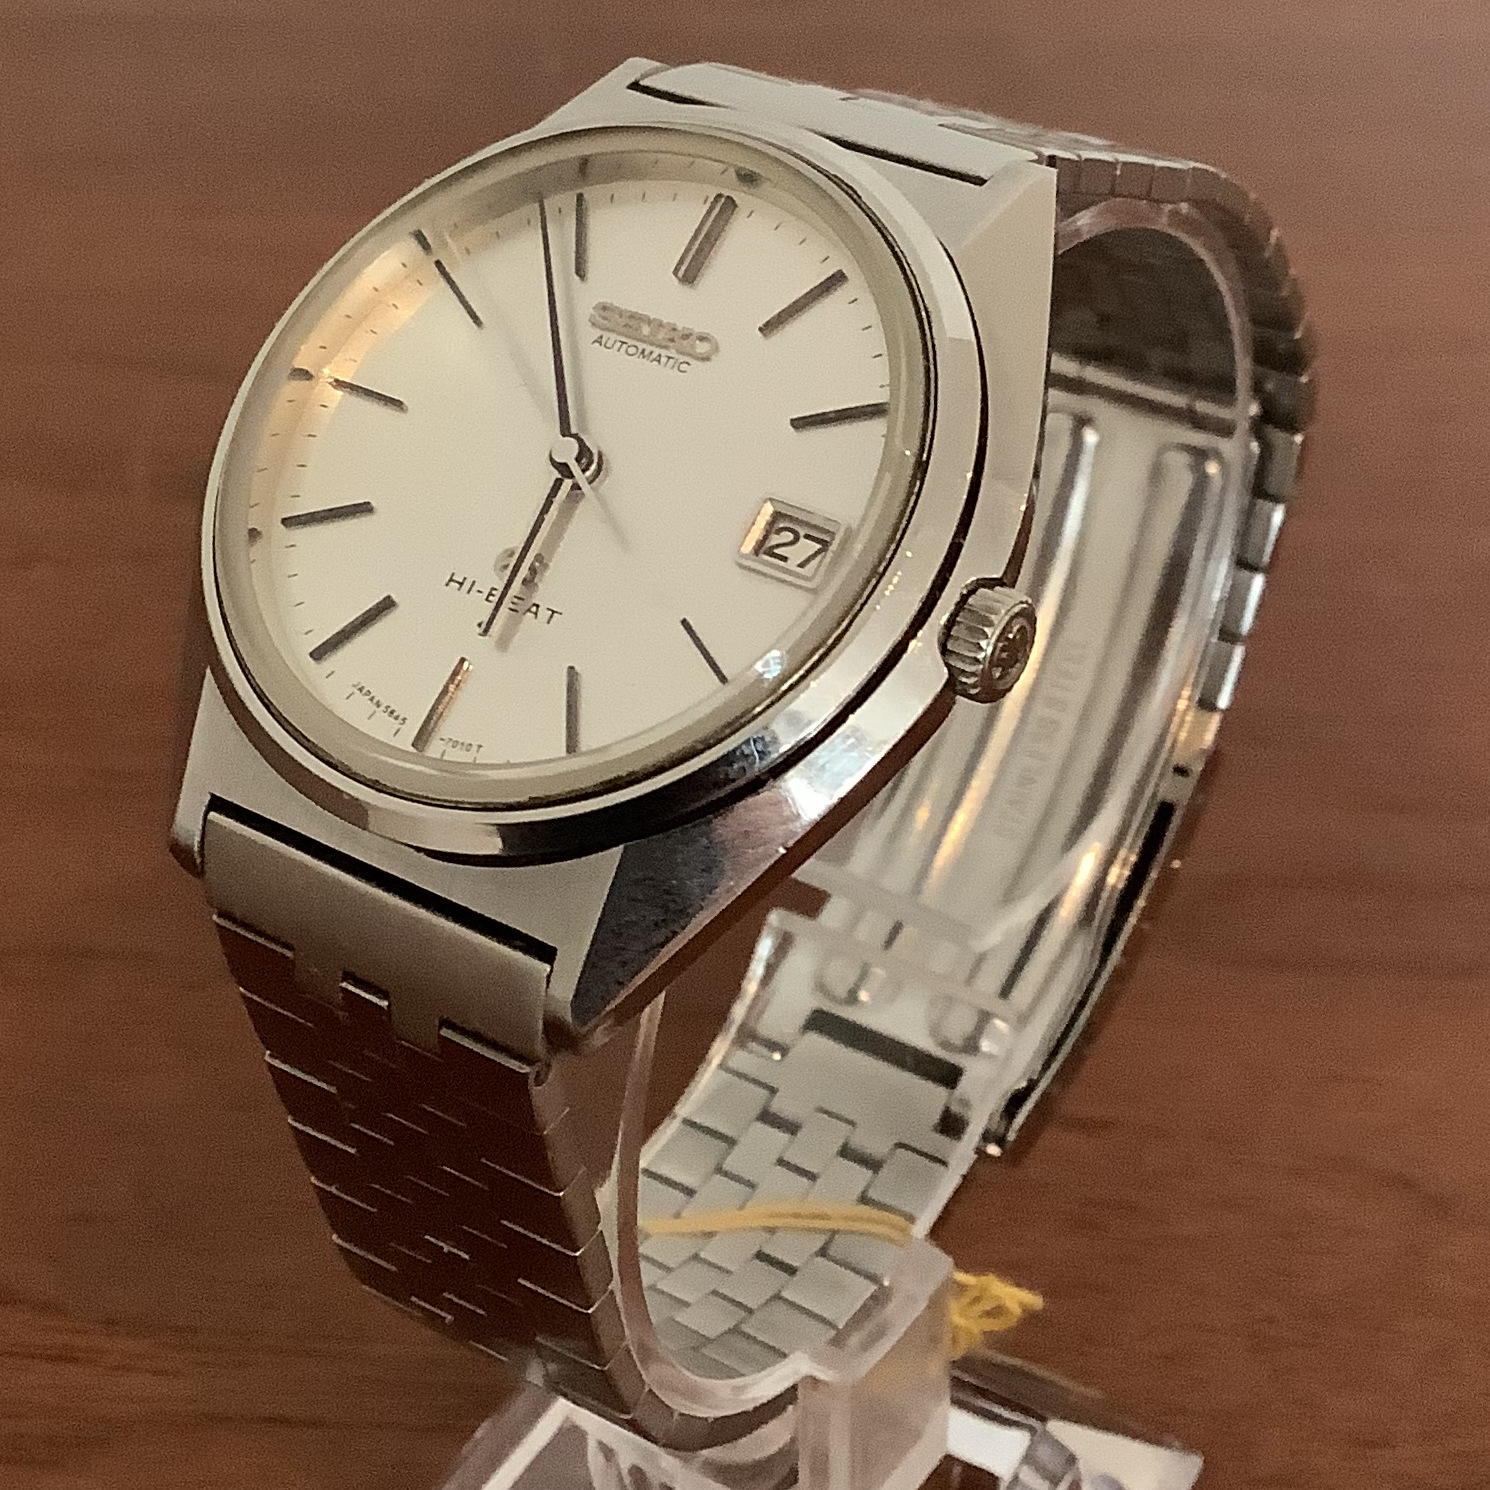 1971 Grand Seiko automatic wristwatch with original 19cm bracelet